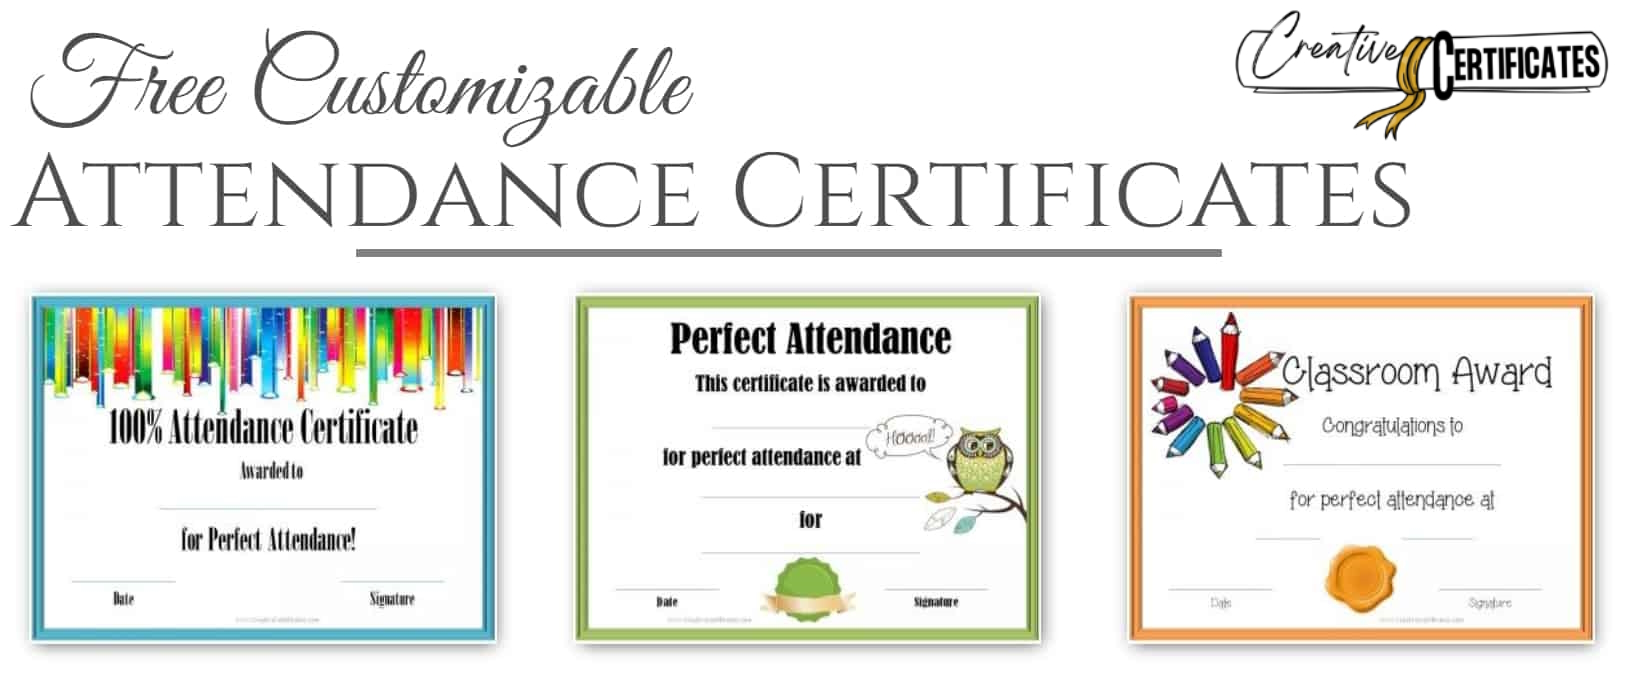 free printable teacher appreciation certificates